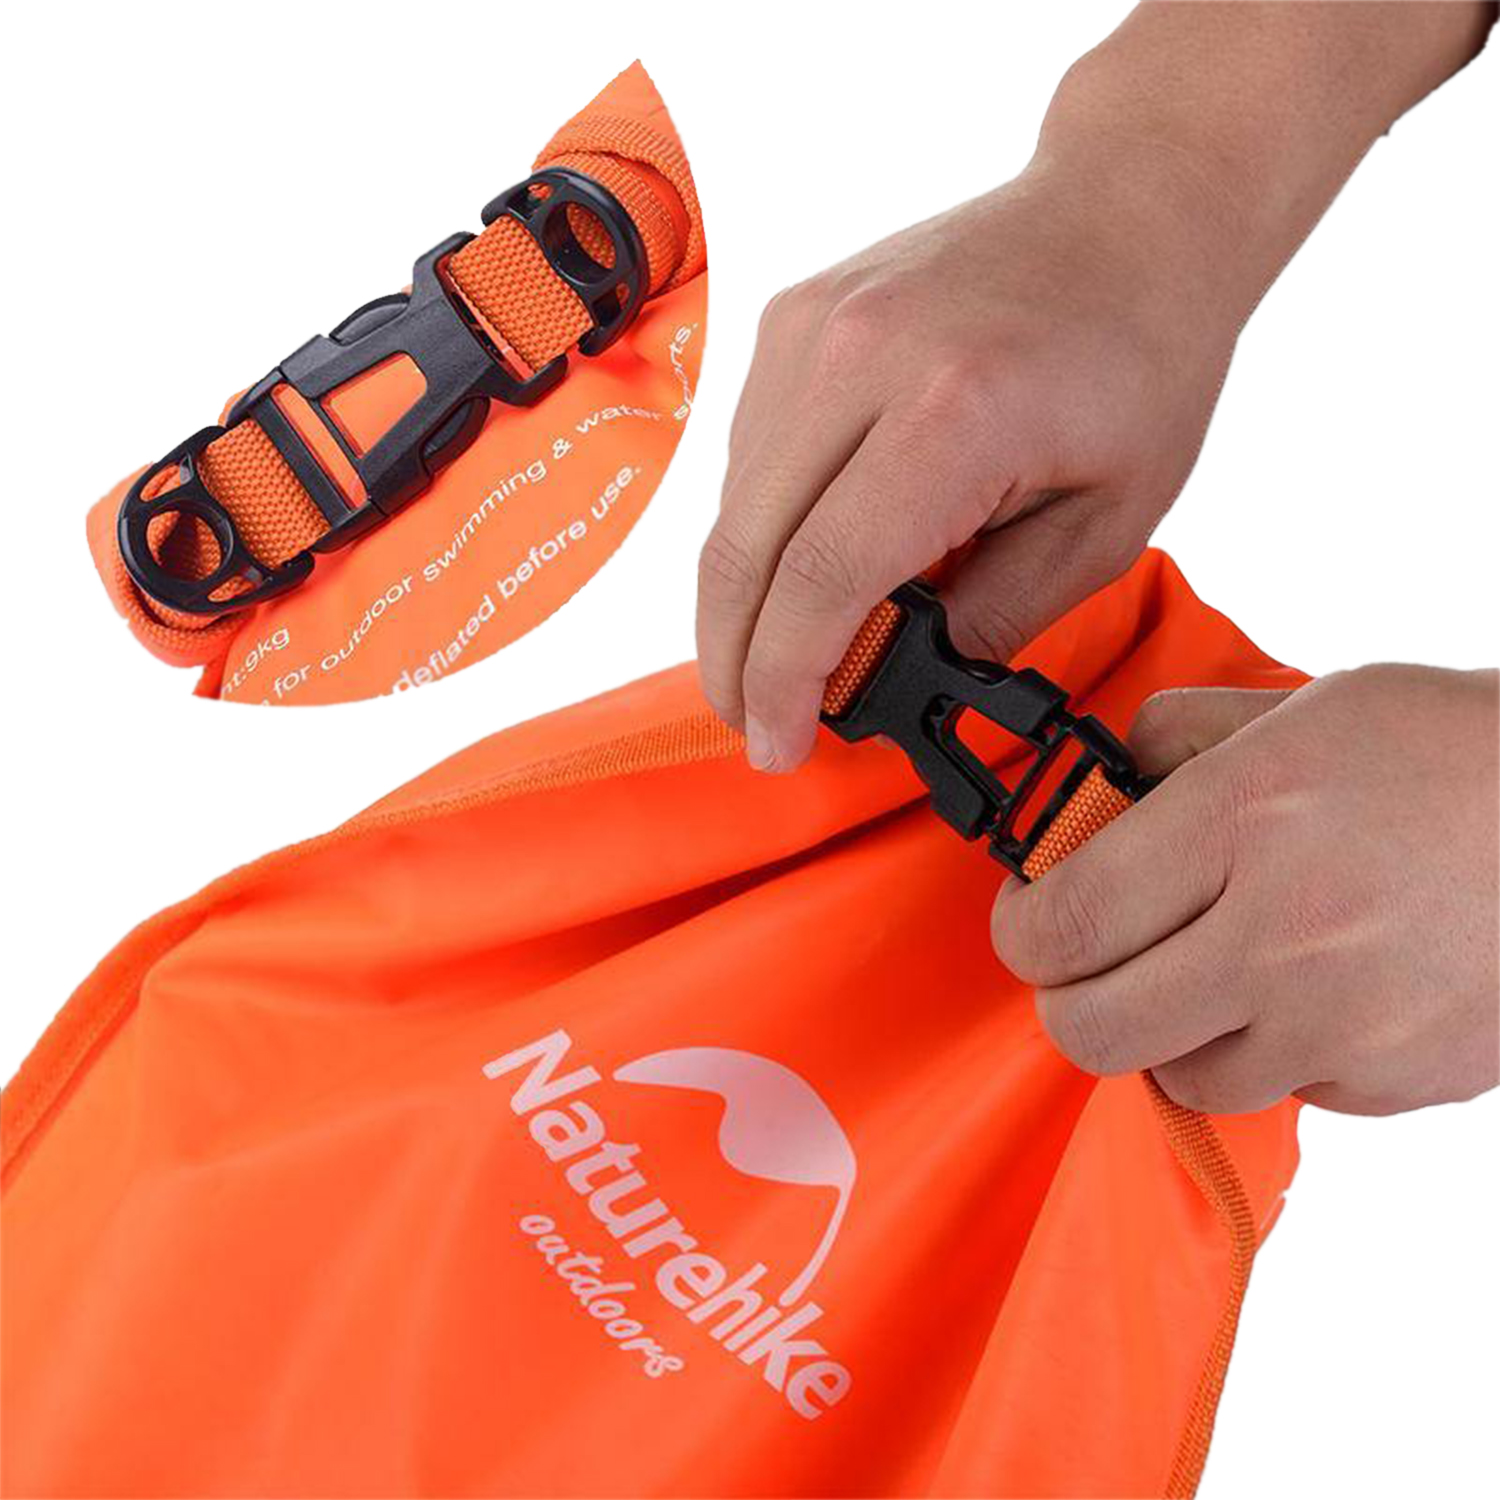 Гермомешок Naturehike 28L inflatable waterproof bag Orange